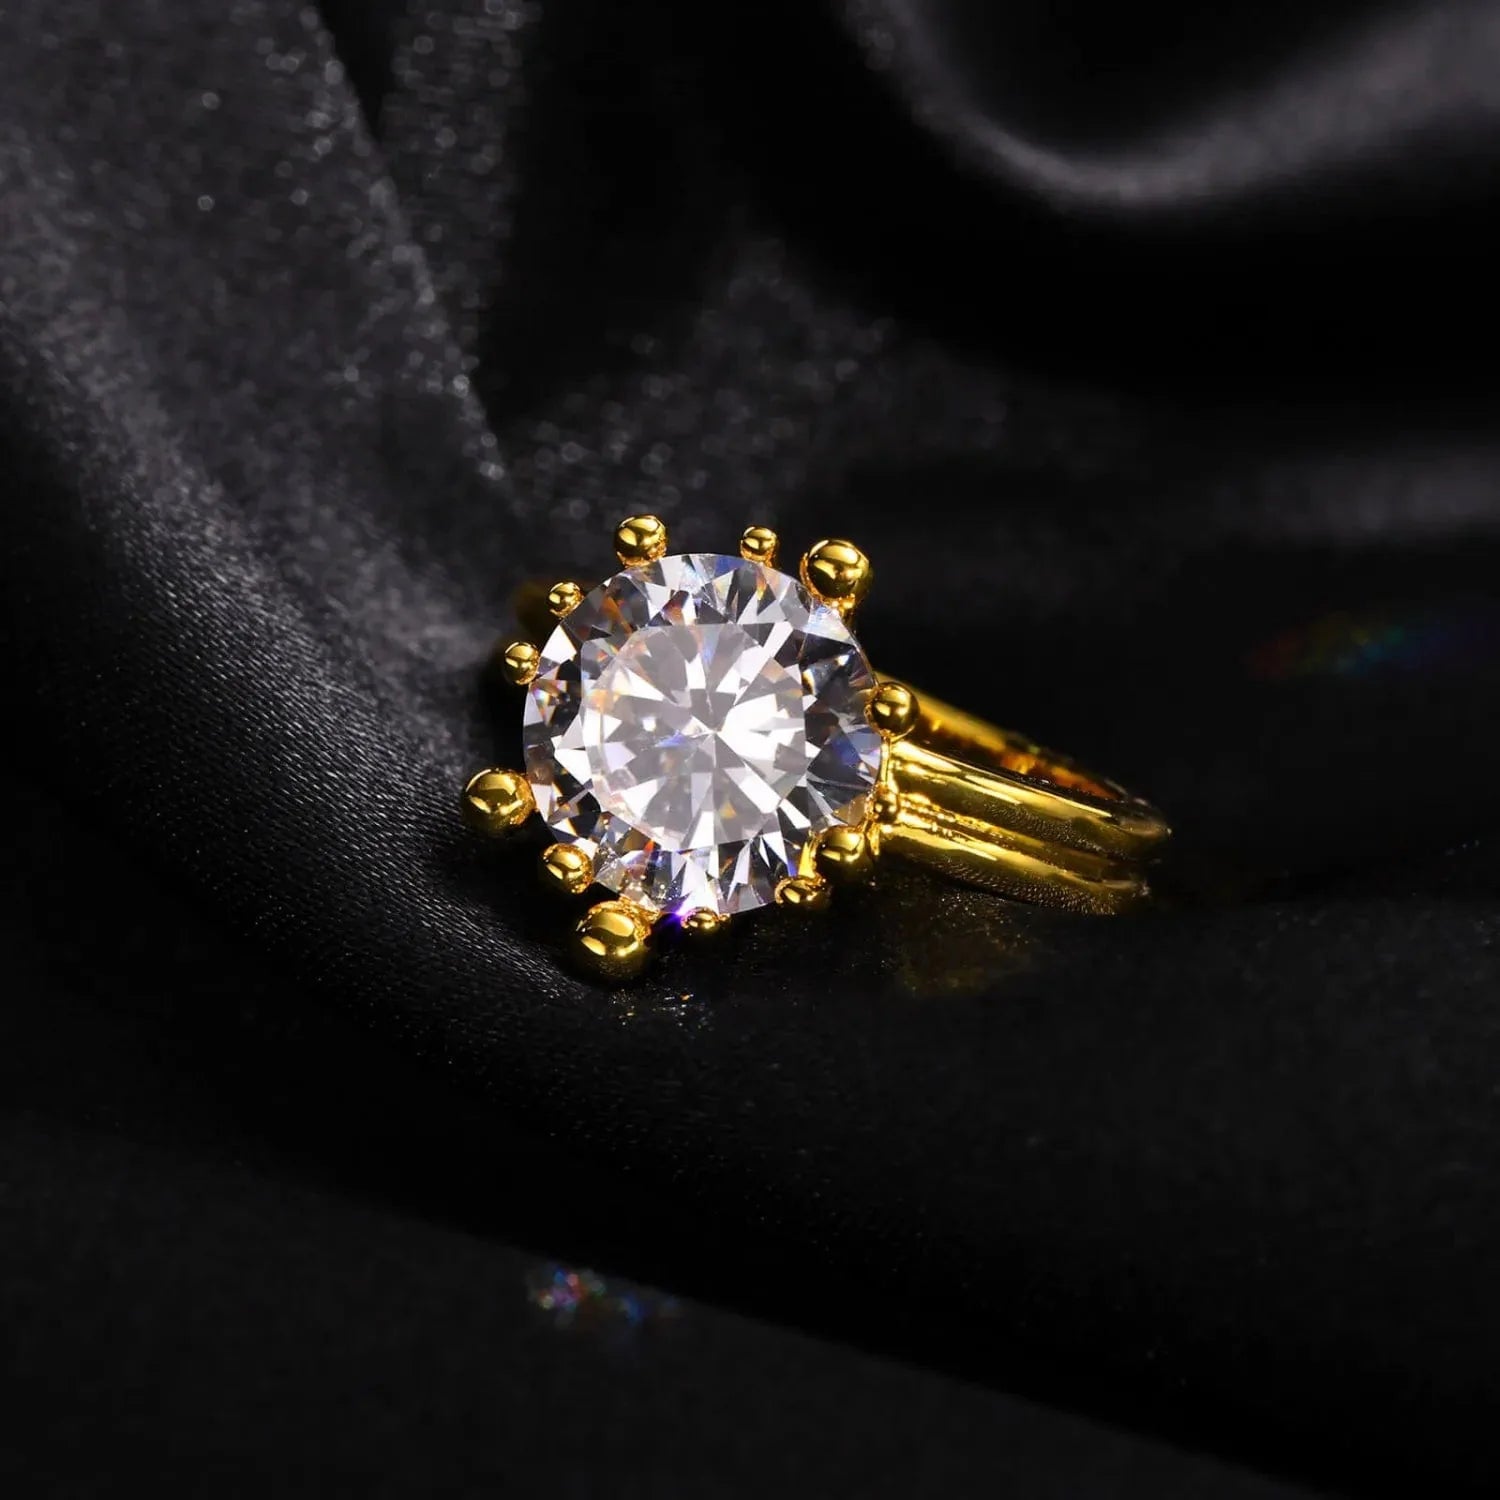 Steel Wedding Ring for Women